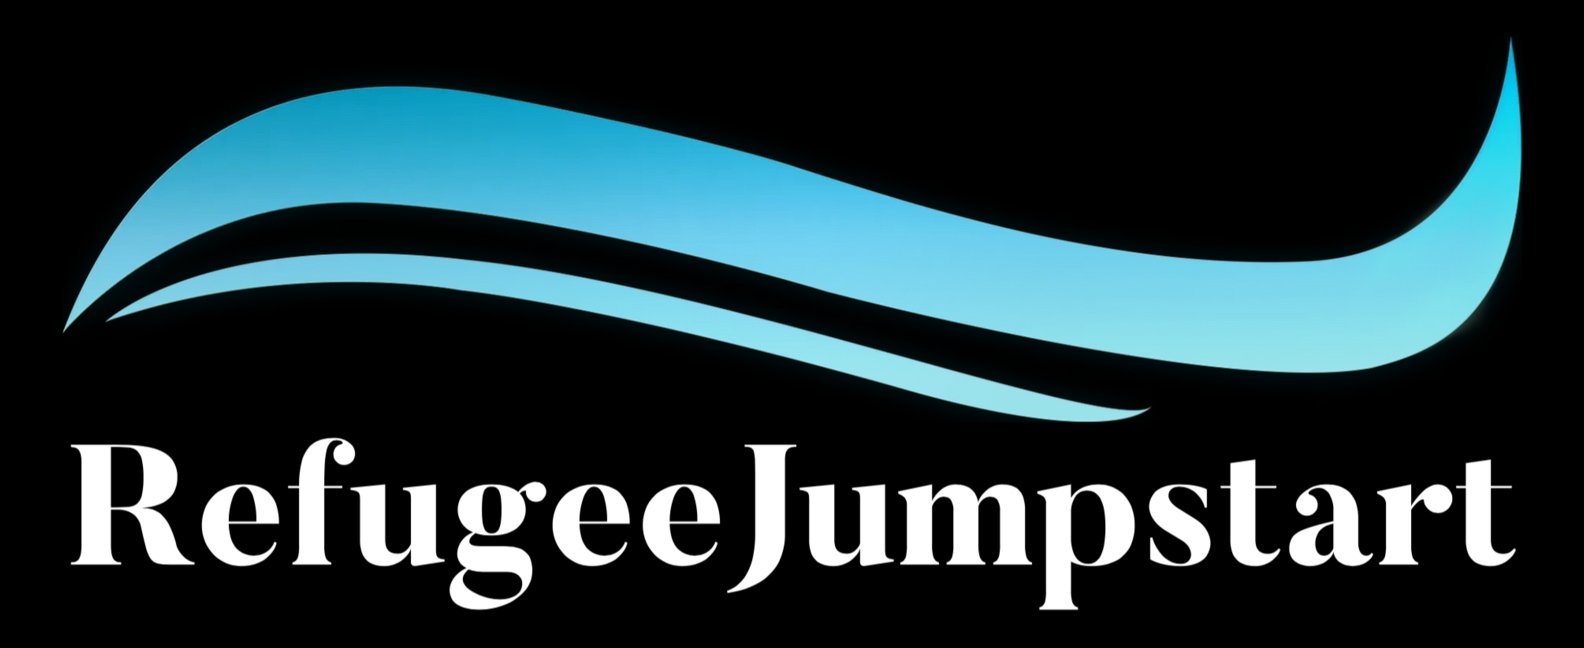 Refugee_Jumpstart_logo.jpg